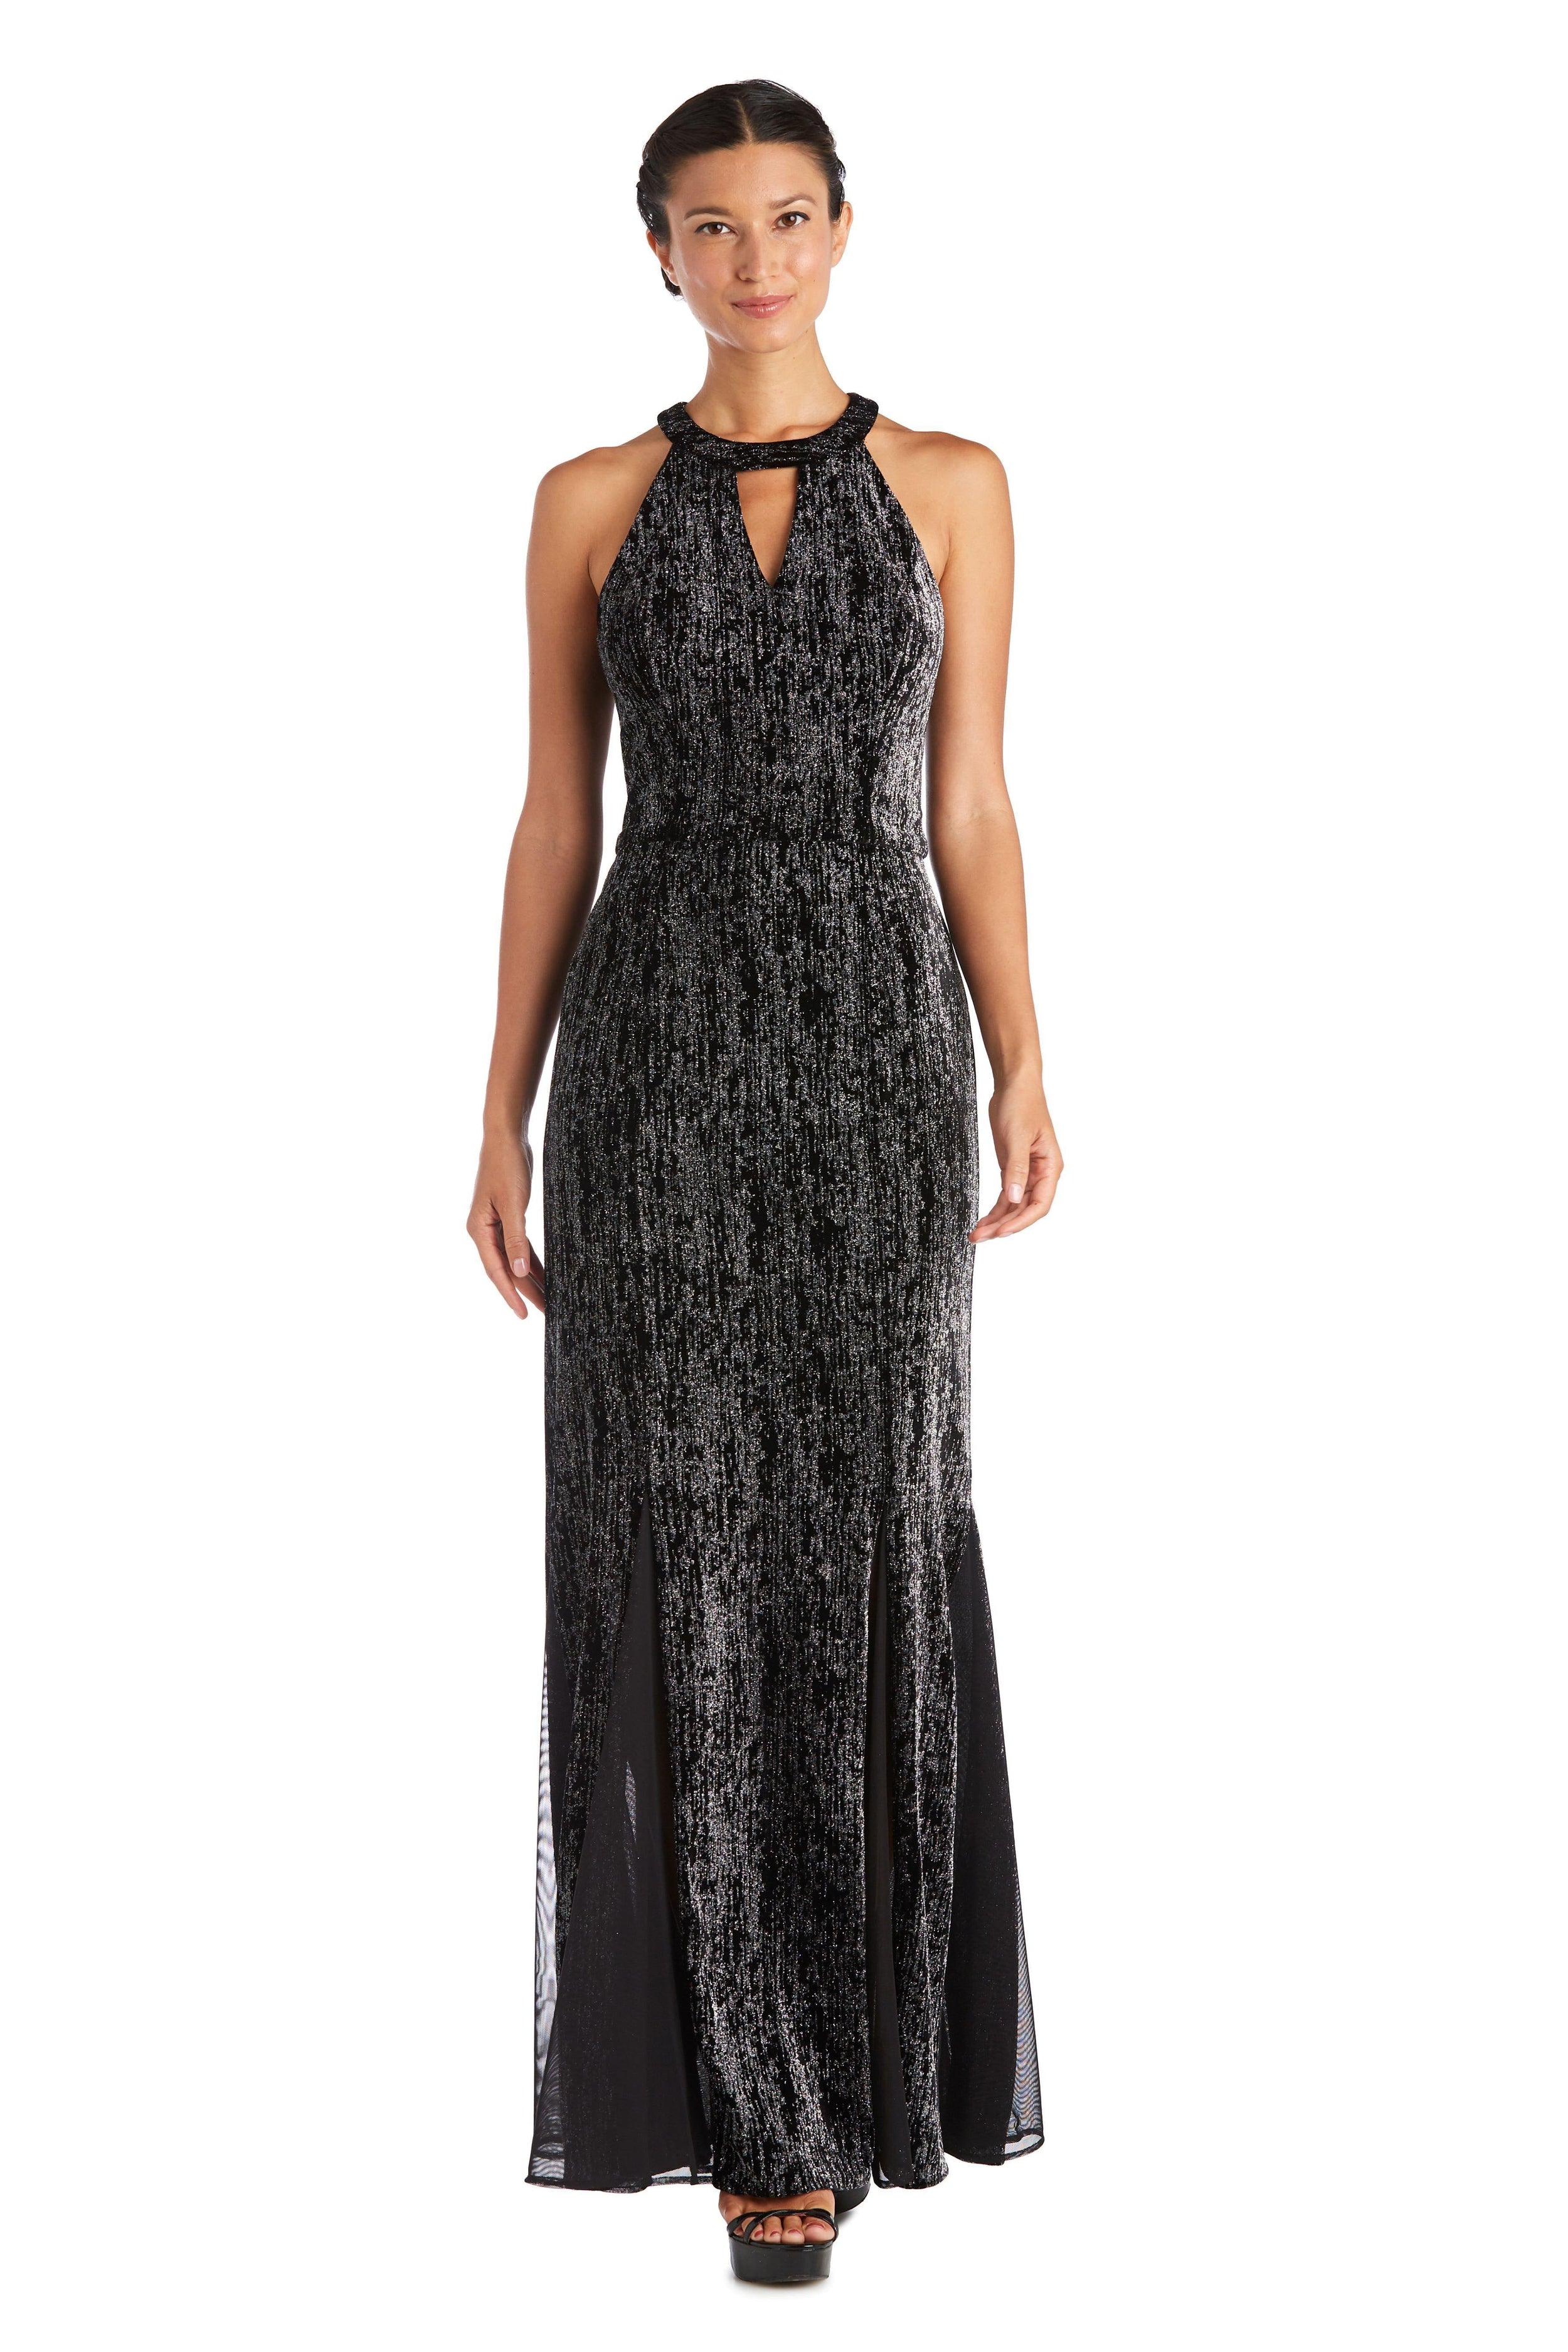 Nightway Long Formal Petite Halter Dress 21996P - The Dress Outlet